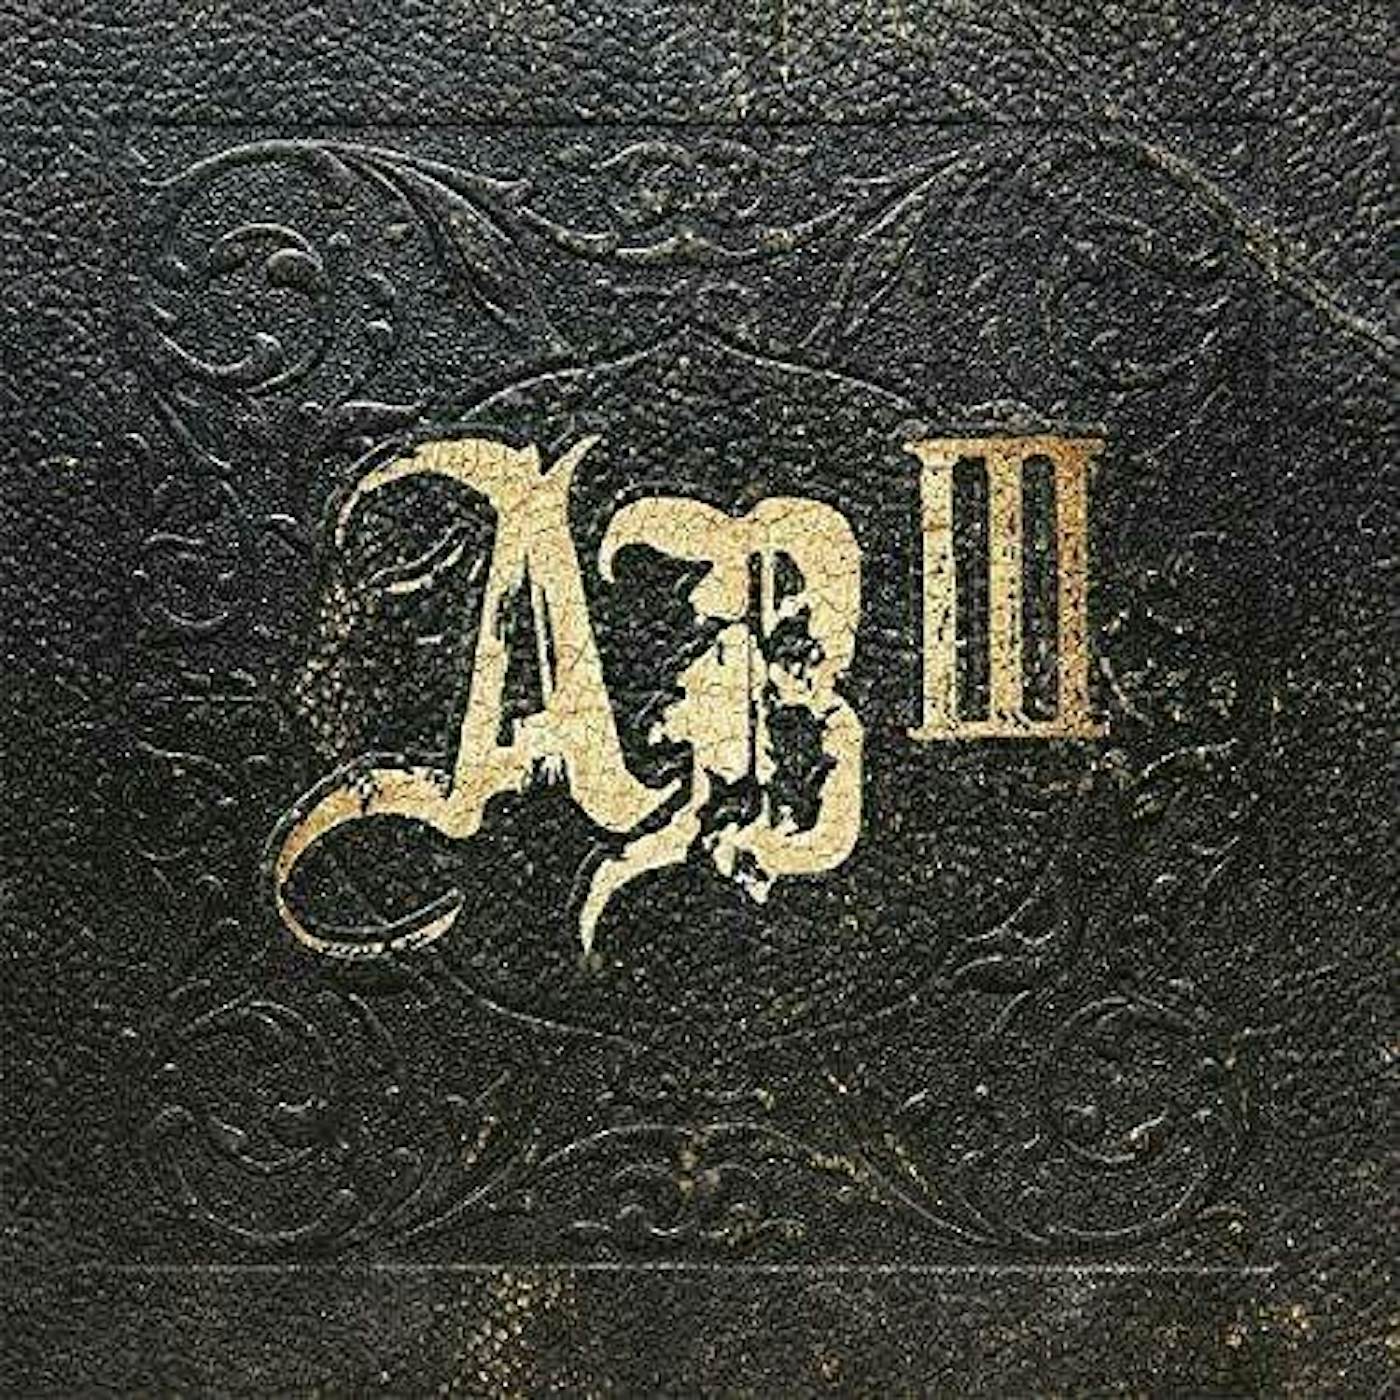 Alter Bridge ABIII Vinyl Record